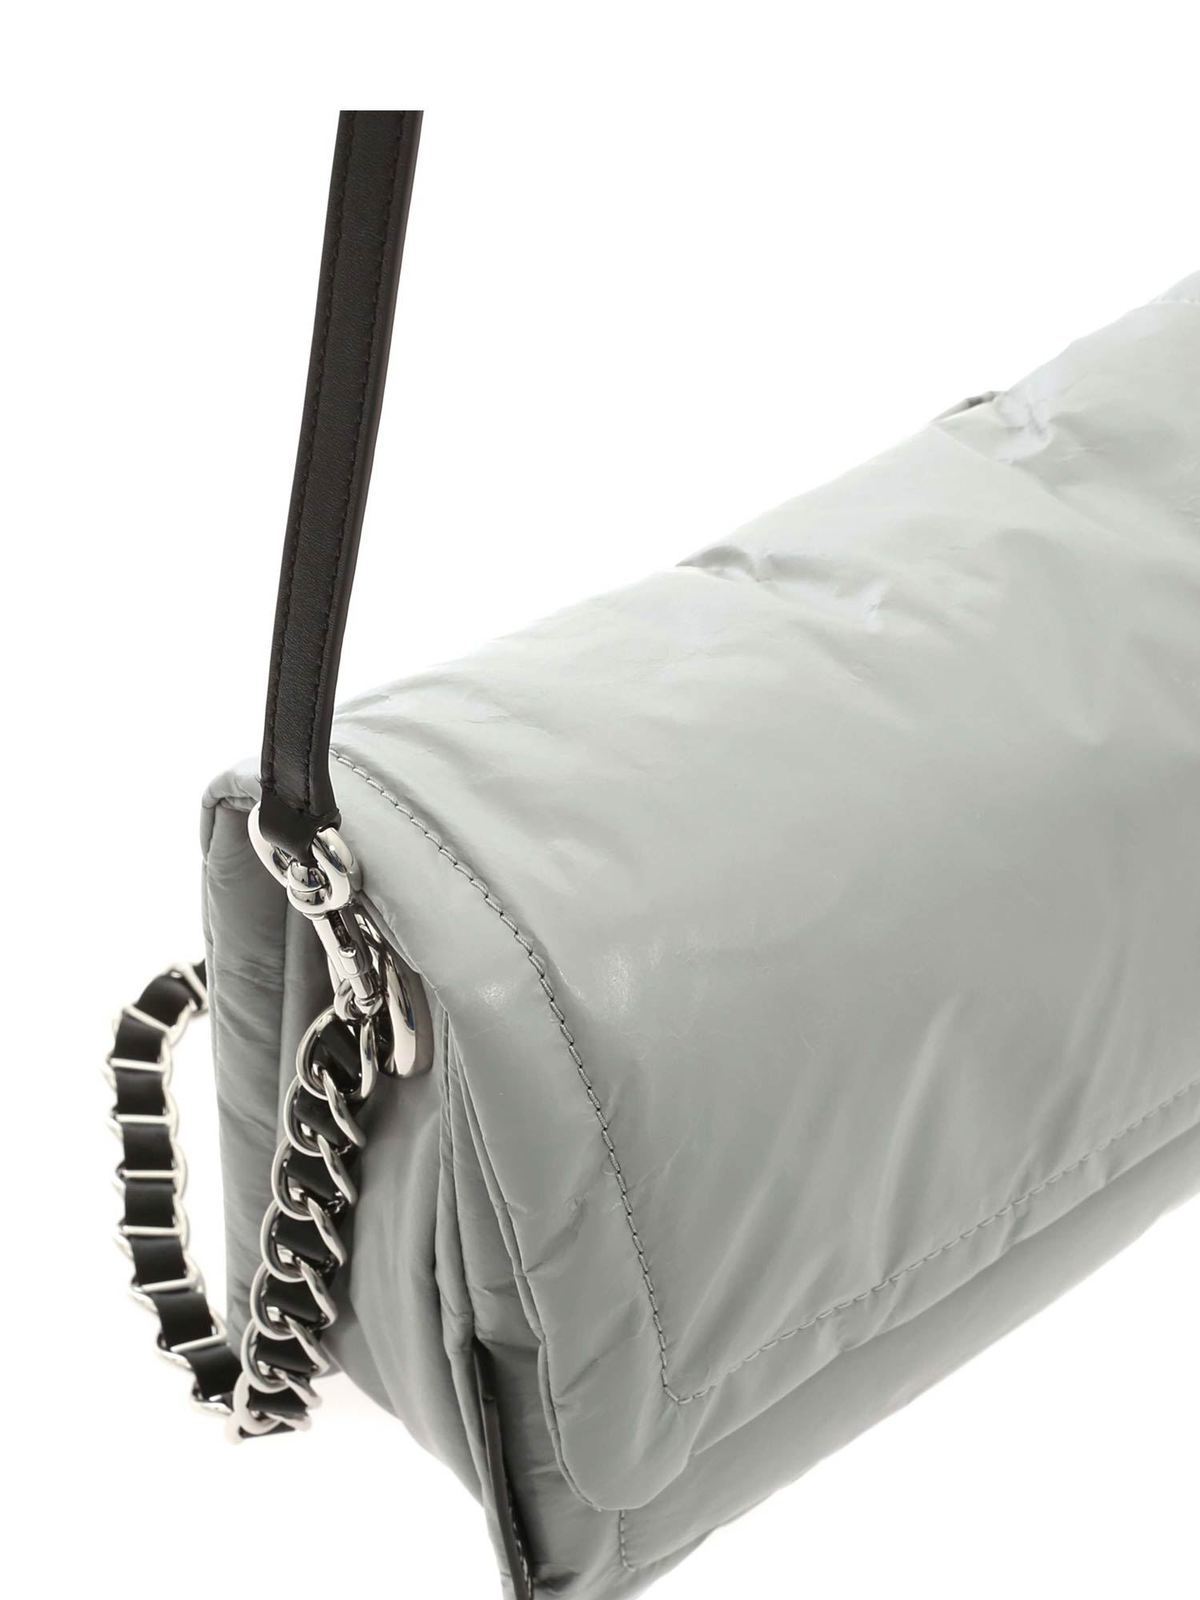 New The Marc Jacobs Mini Pillow Bag, Black, No Detachable Strap